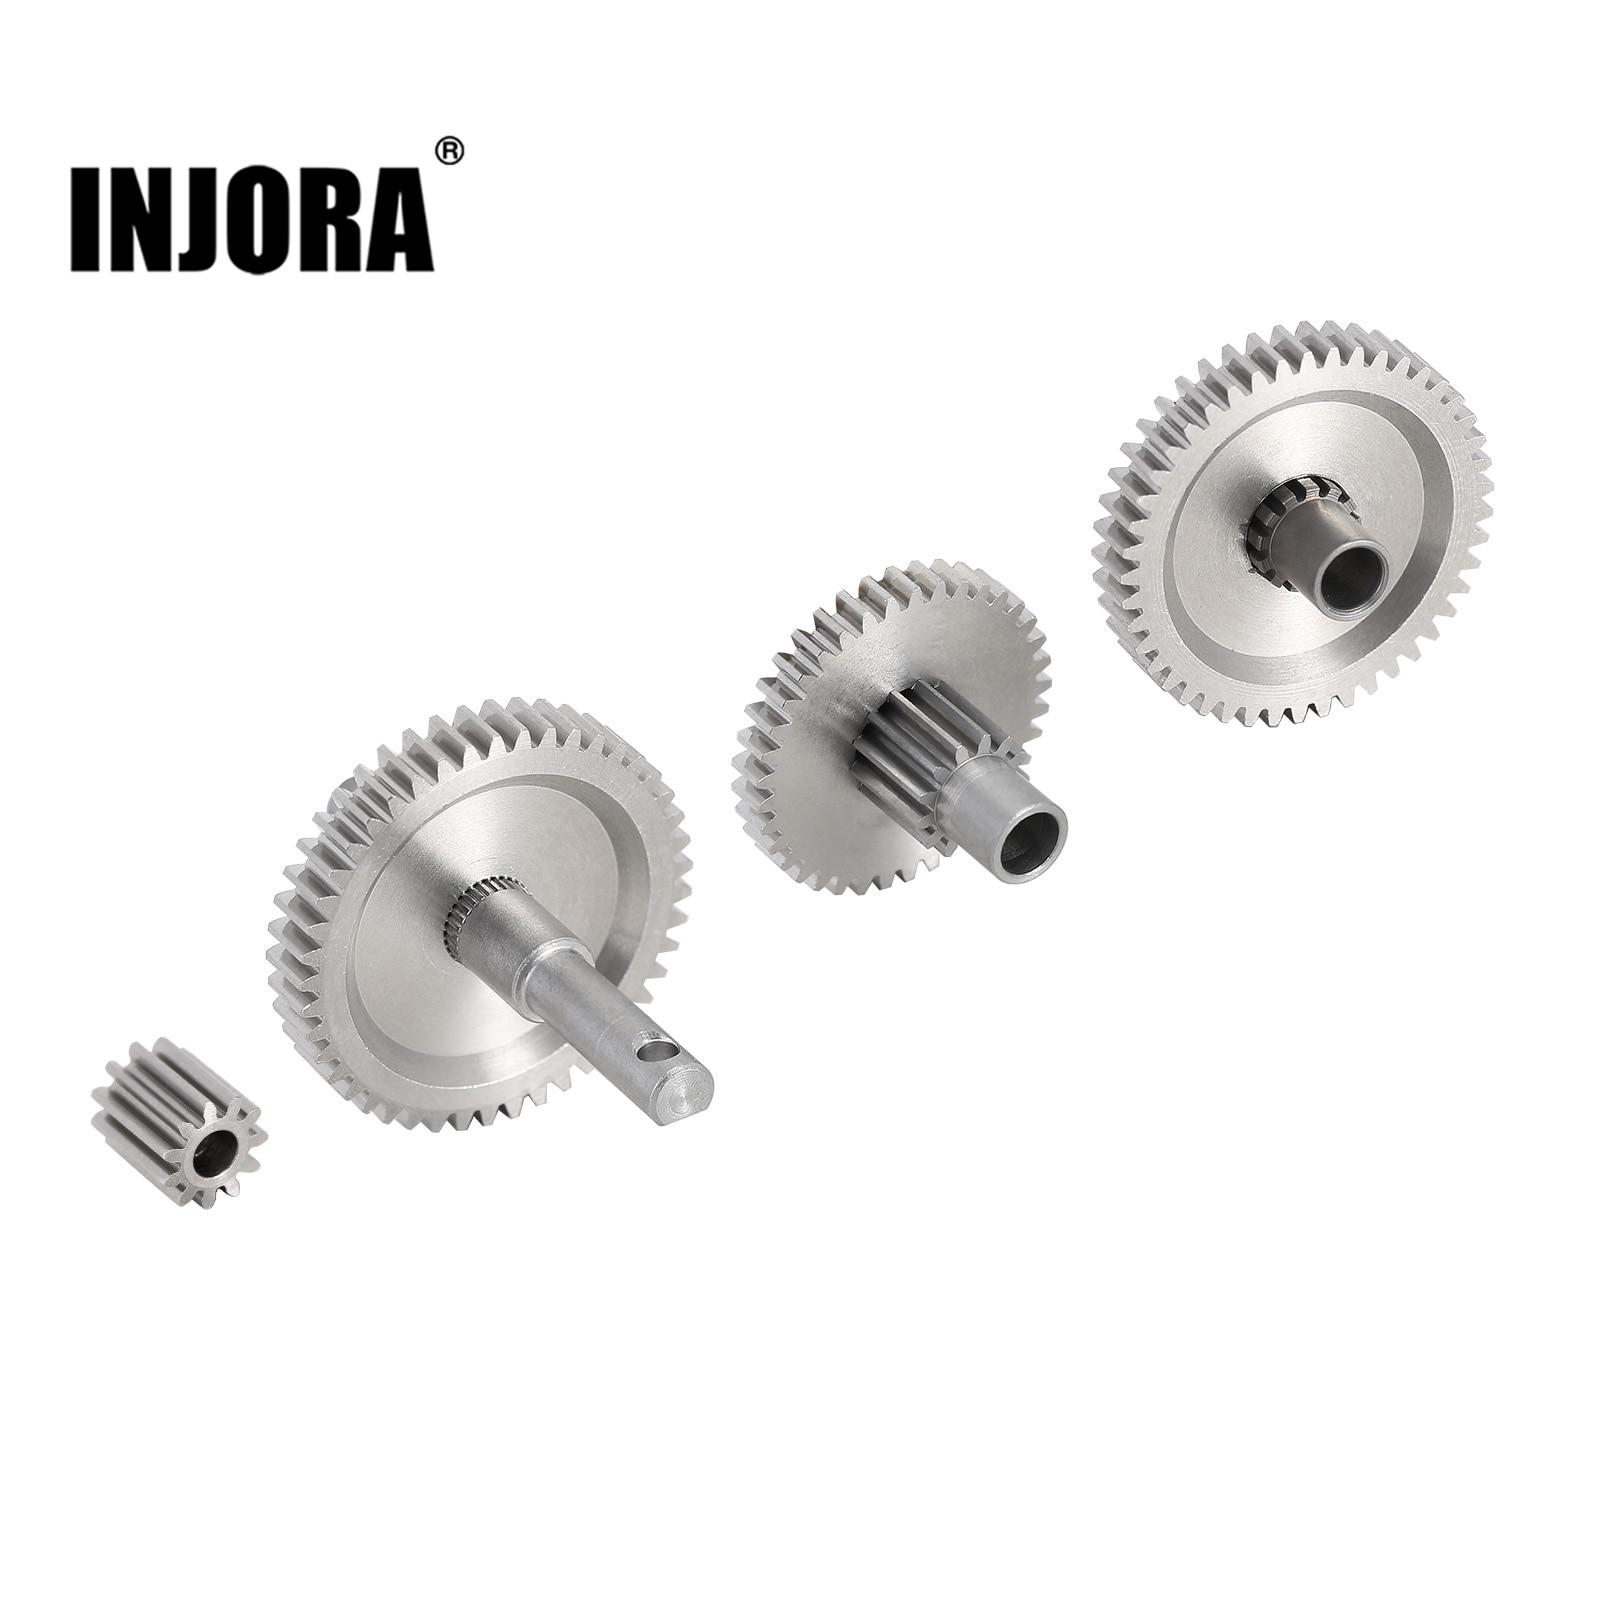 INJORA-Stainless-Steel-40-3-1-Low-Range-Transmission-Gear-Pinion-Set-for-1-18-RC.jpg